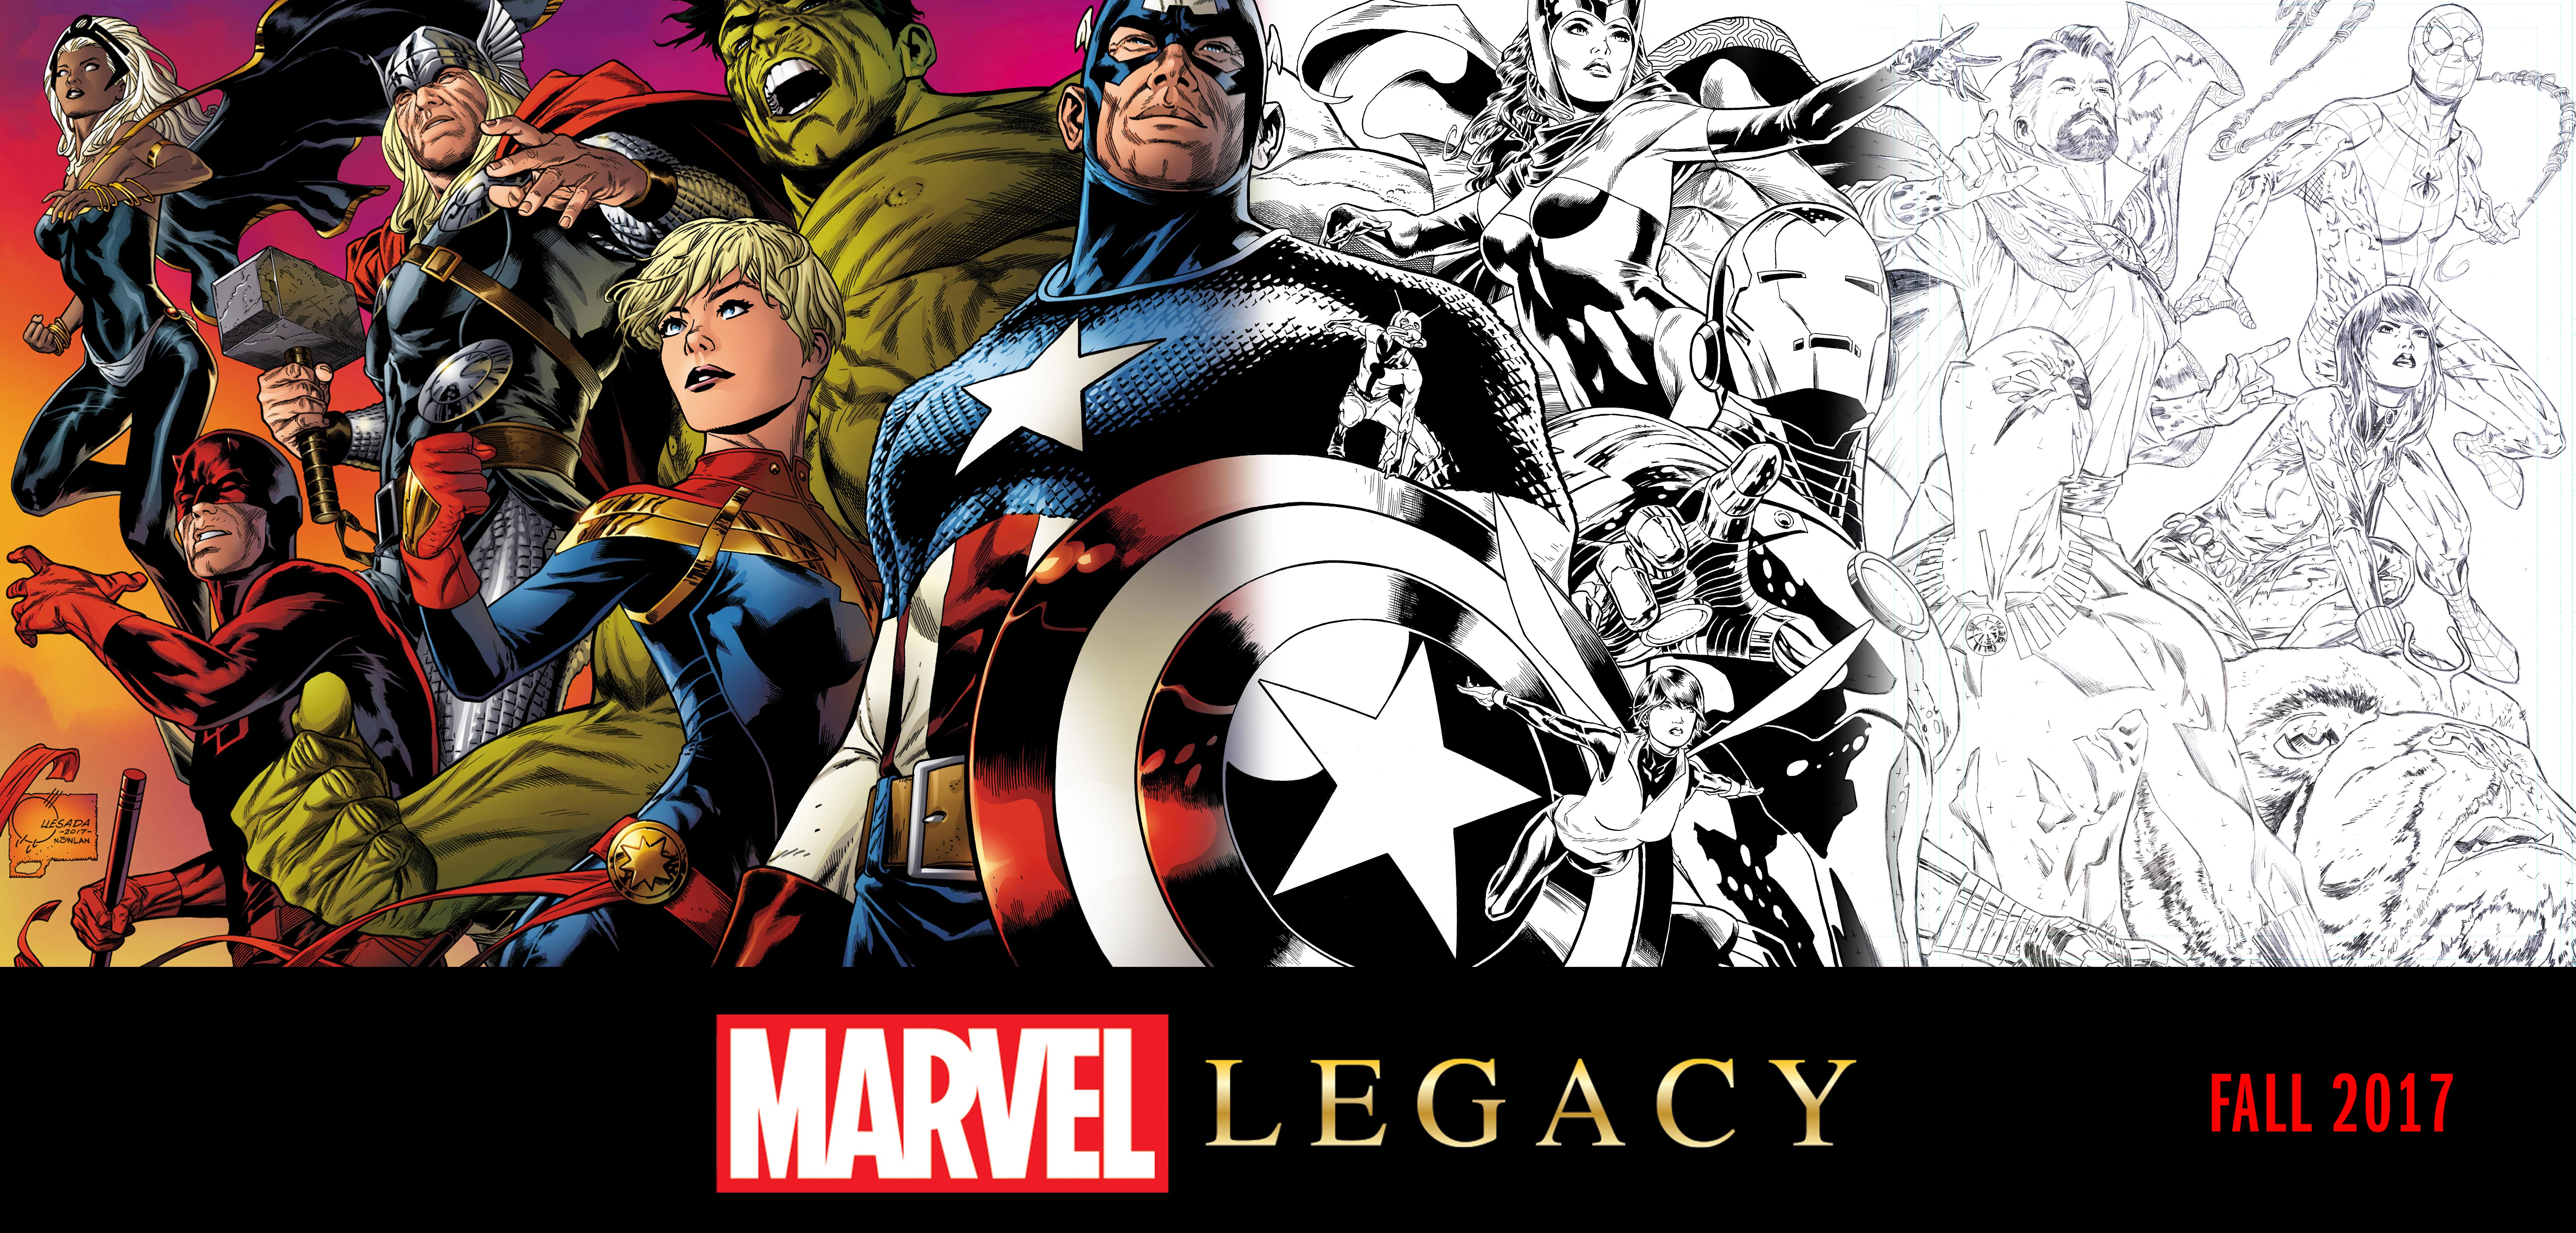 Marvel Legacy Cover by Joe Quesada